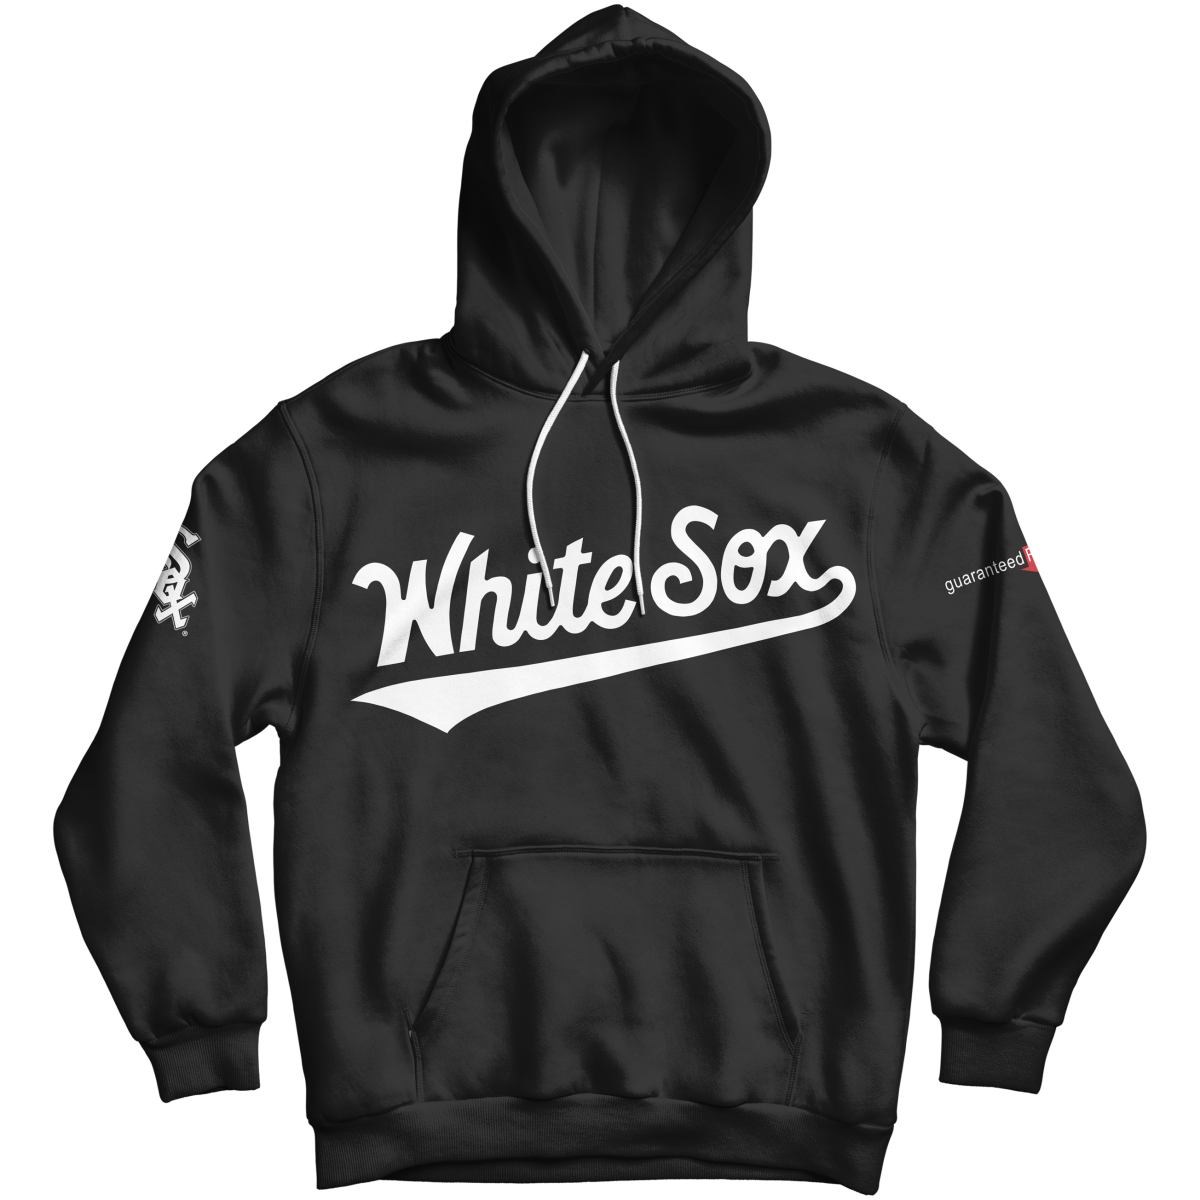 White Sox 2019 Hoodie